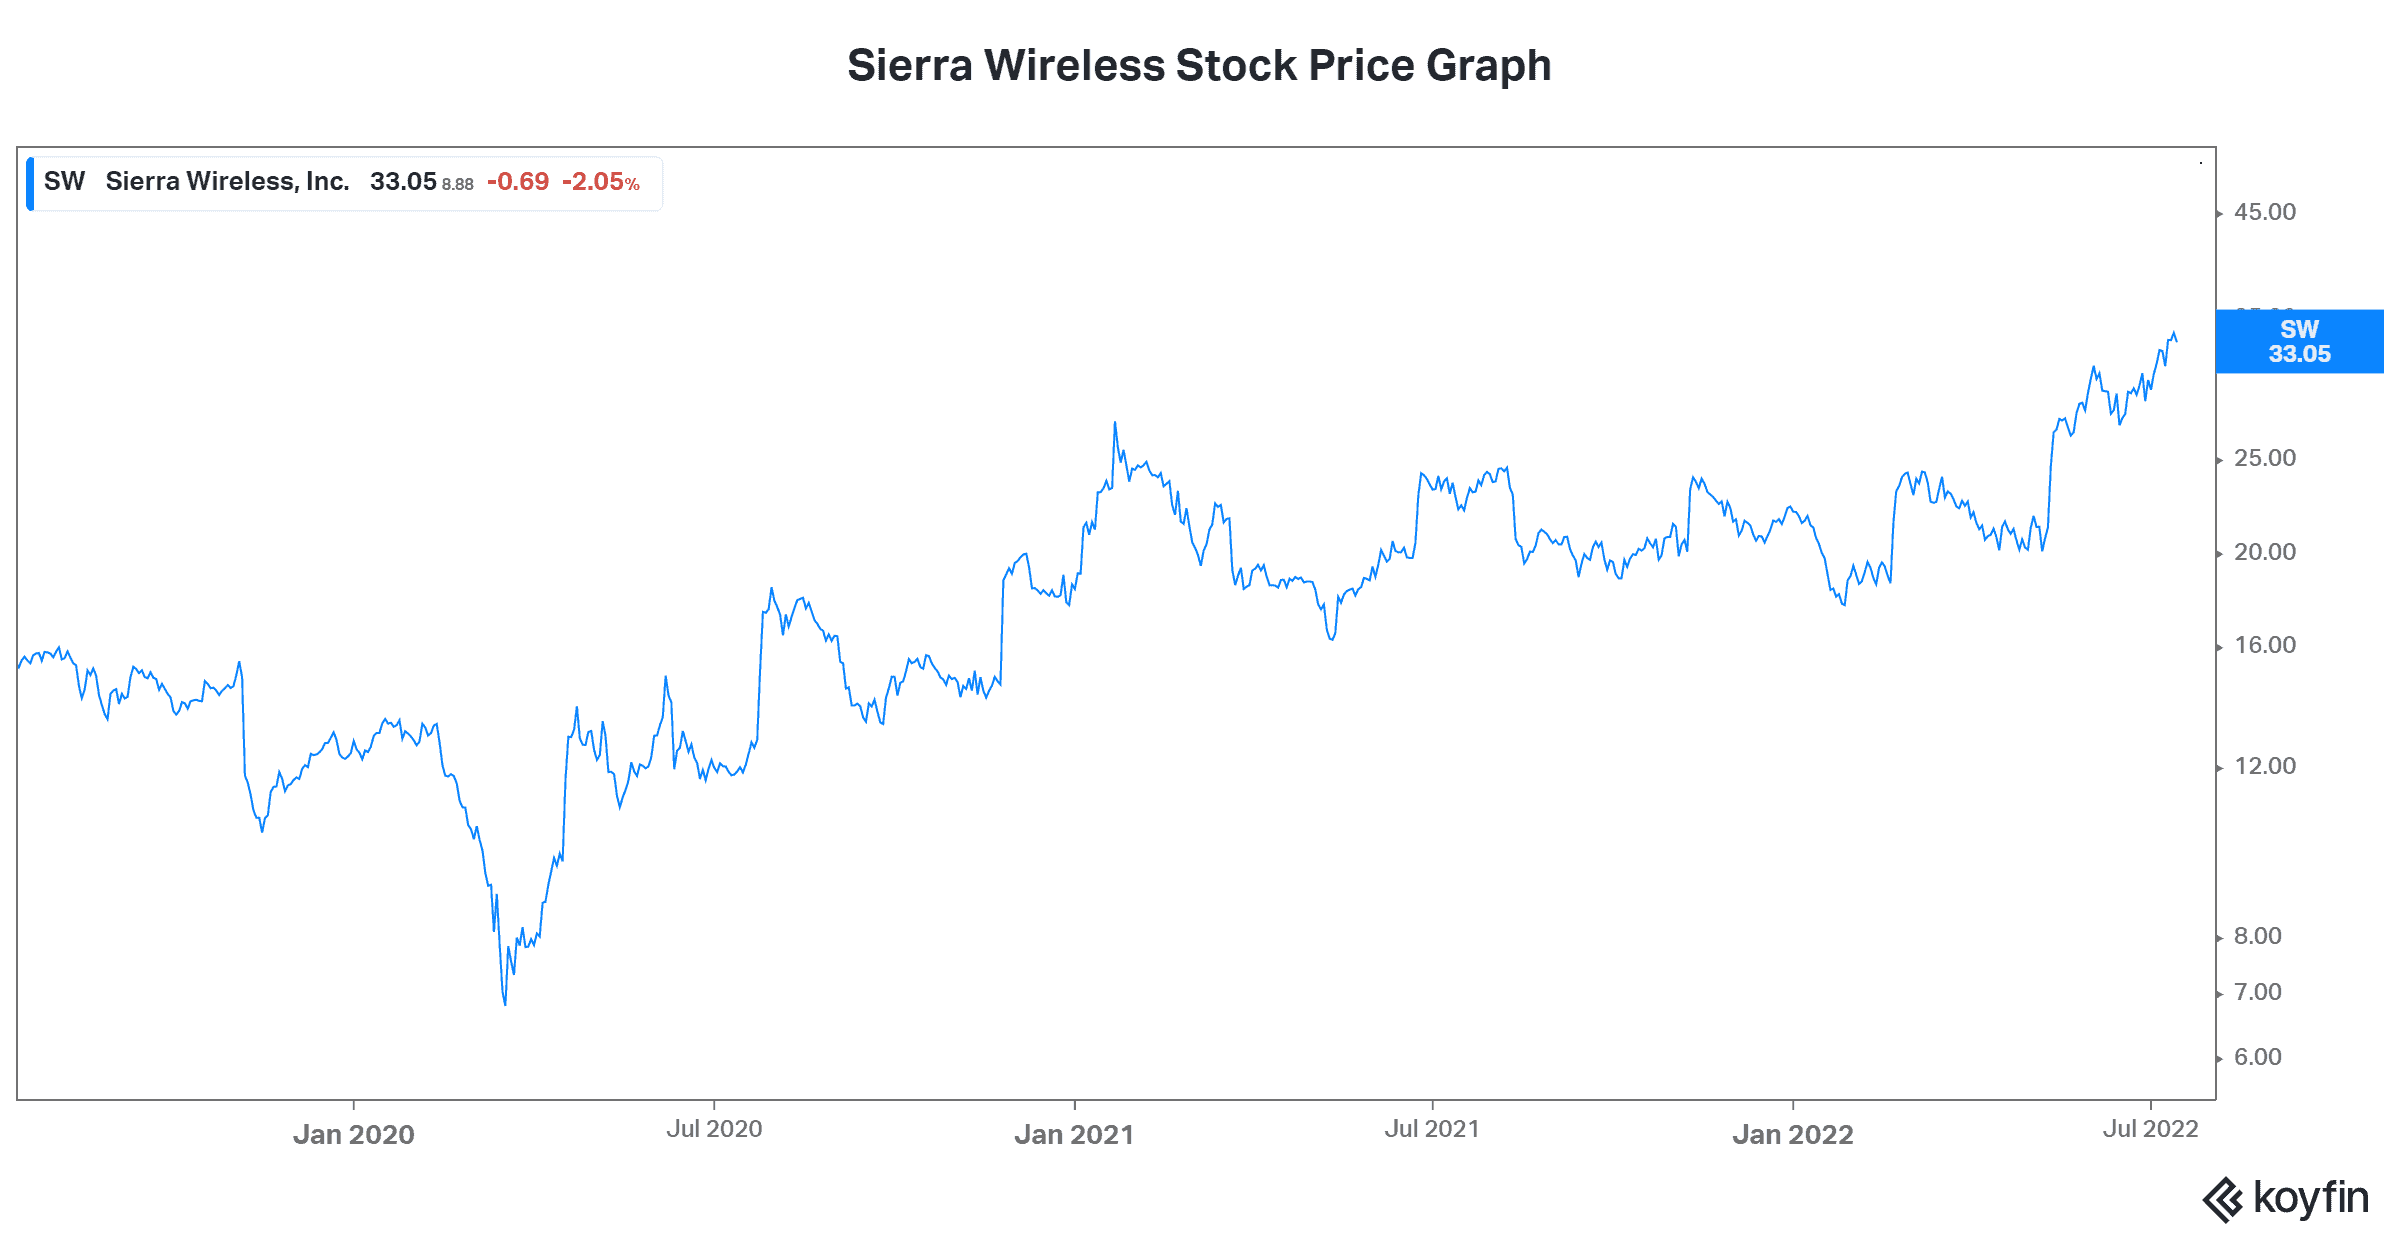 Growth stock Sierra Wireless